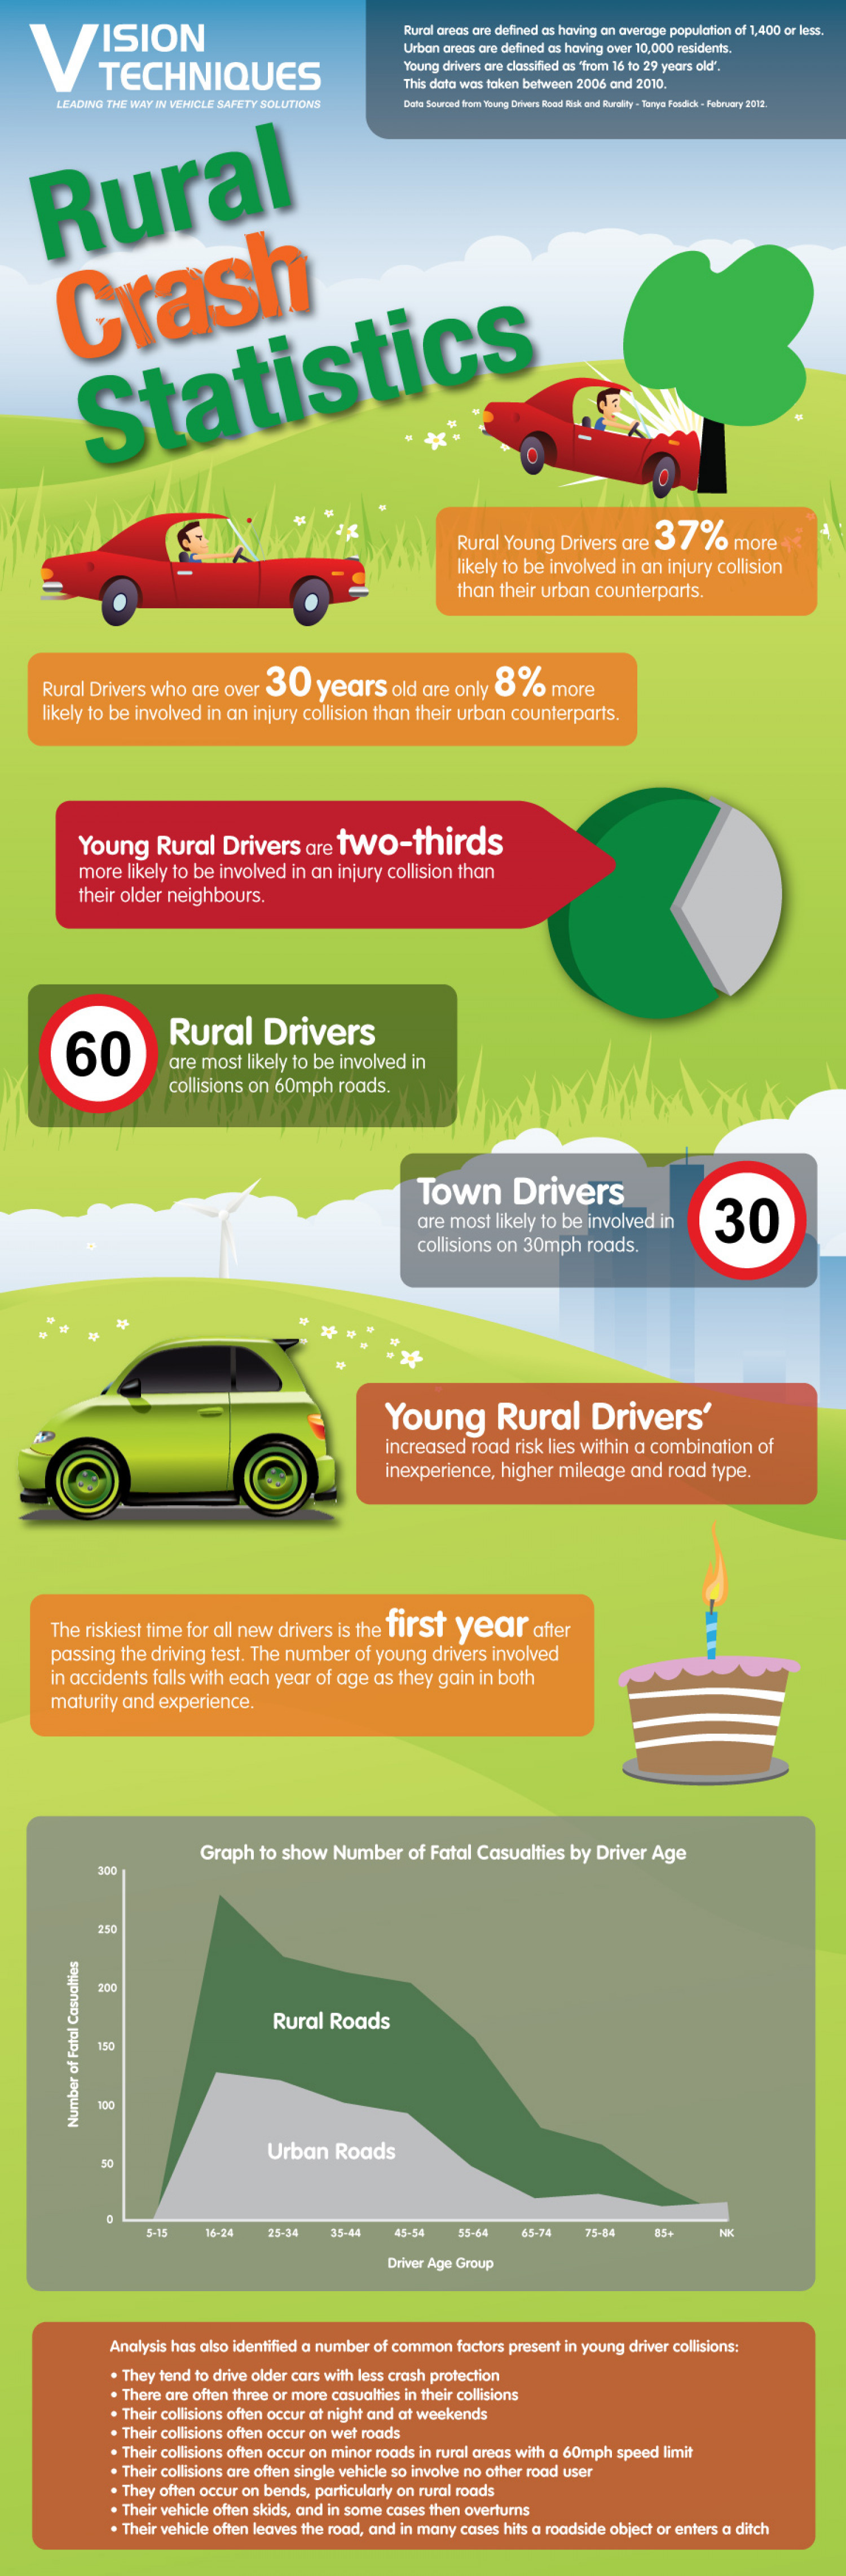 Rural Crash Statistics by Vision Techniques Infographic